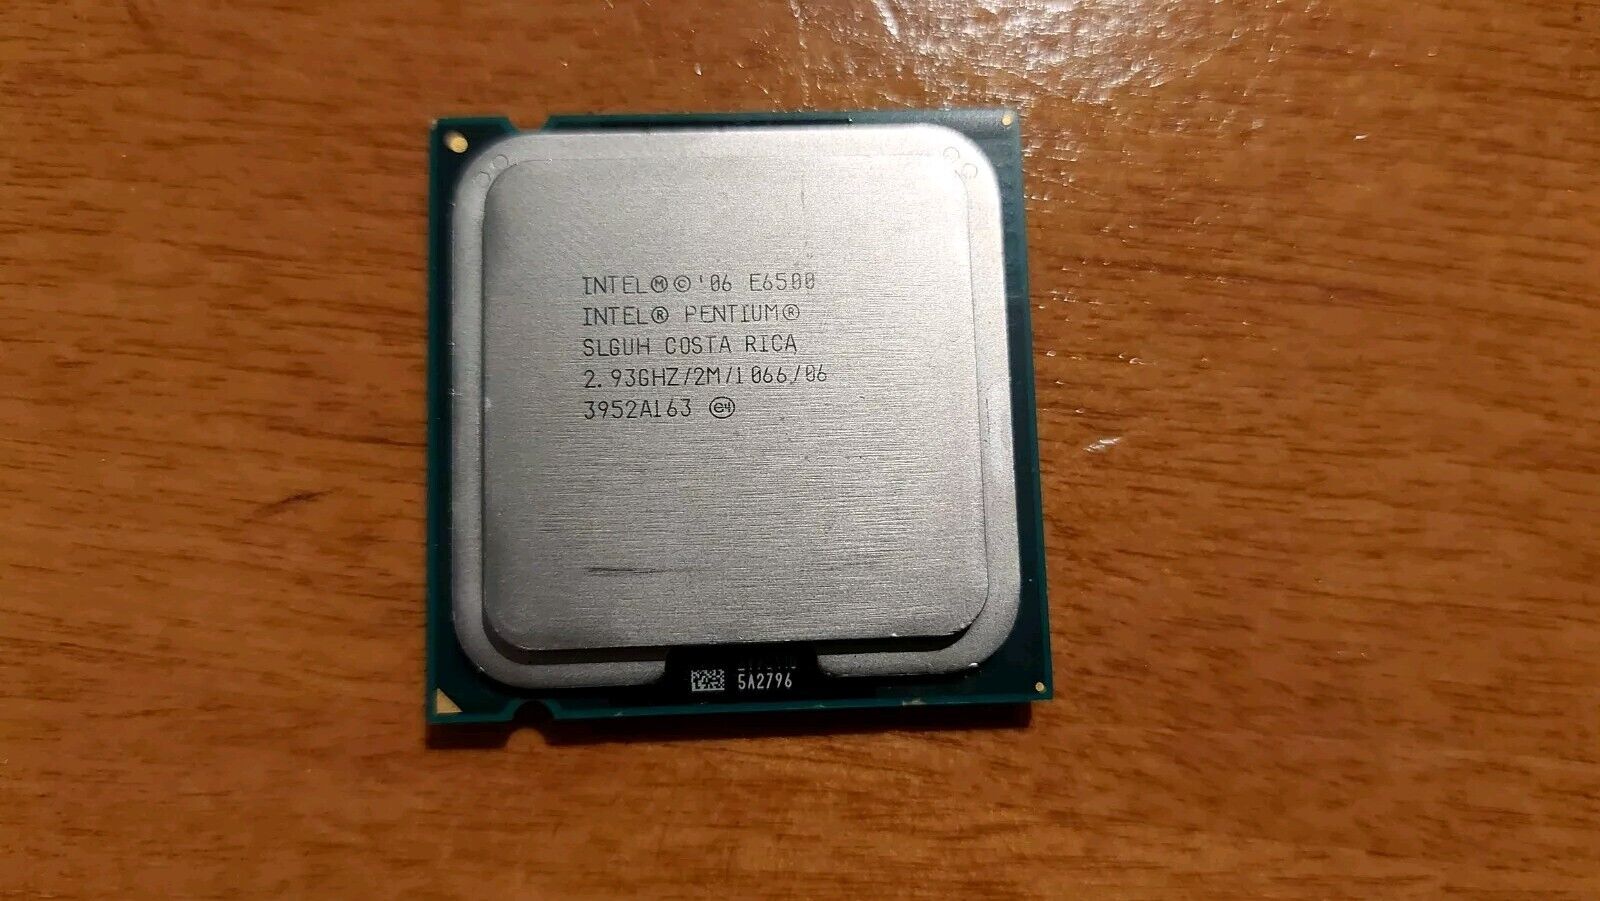 Intel Pentium Dual Core E6500 2.93GHz